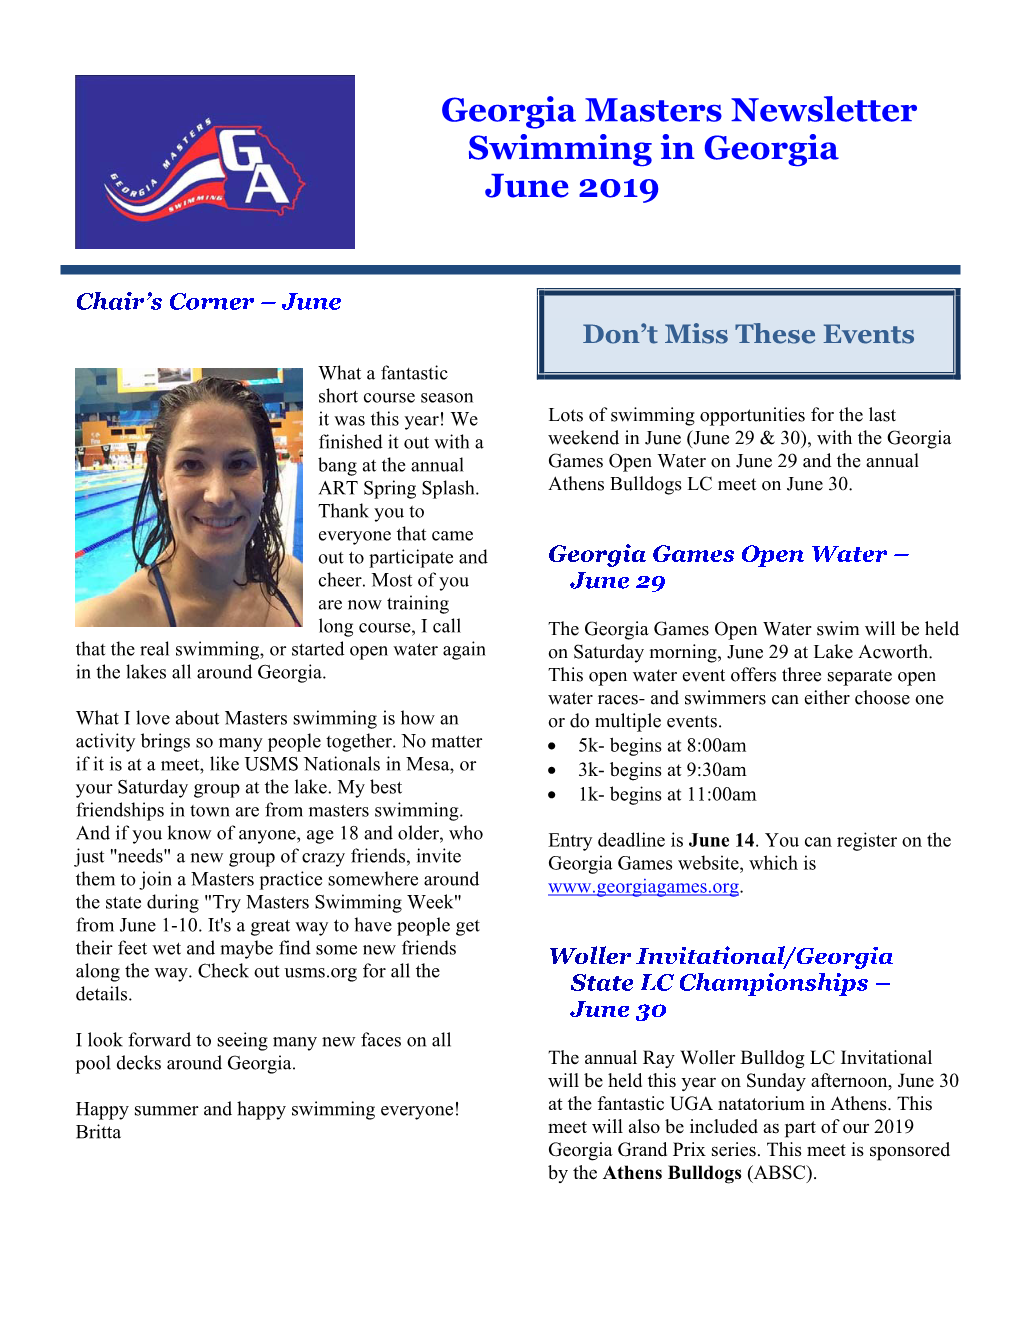 Georgia Masters Newsletter Swimming in Georgia June 2019